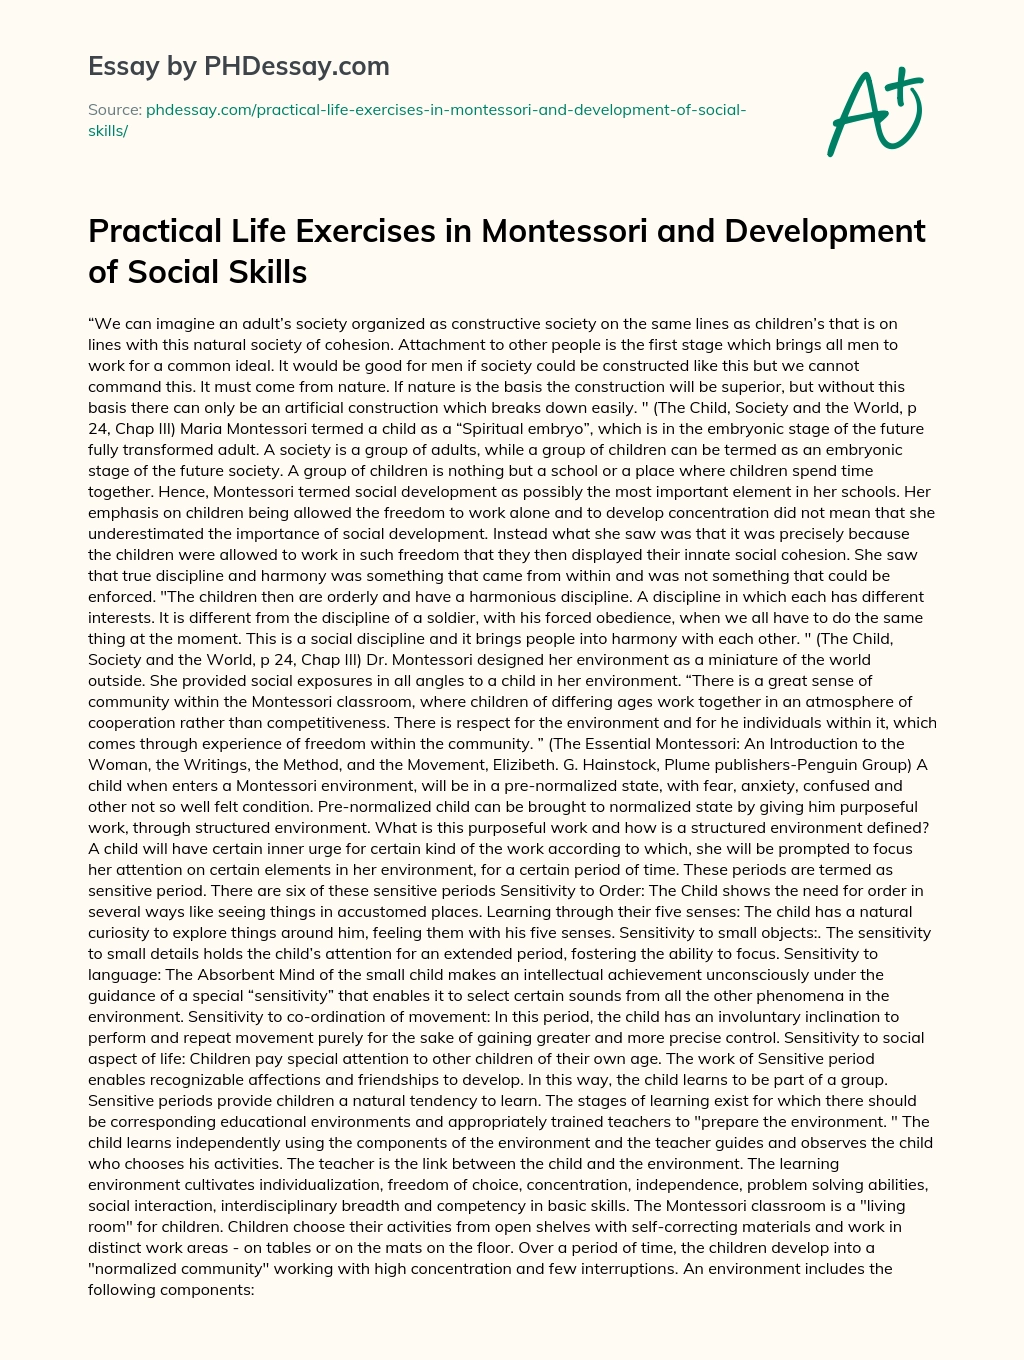 Practical Life Exercises in Montessori and Development of Social Skills essay